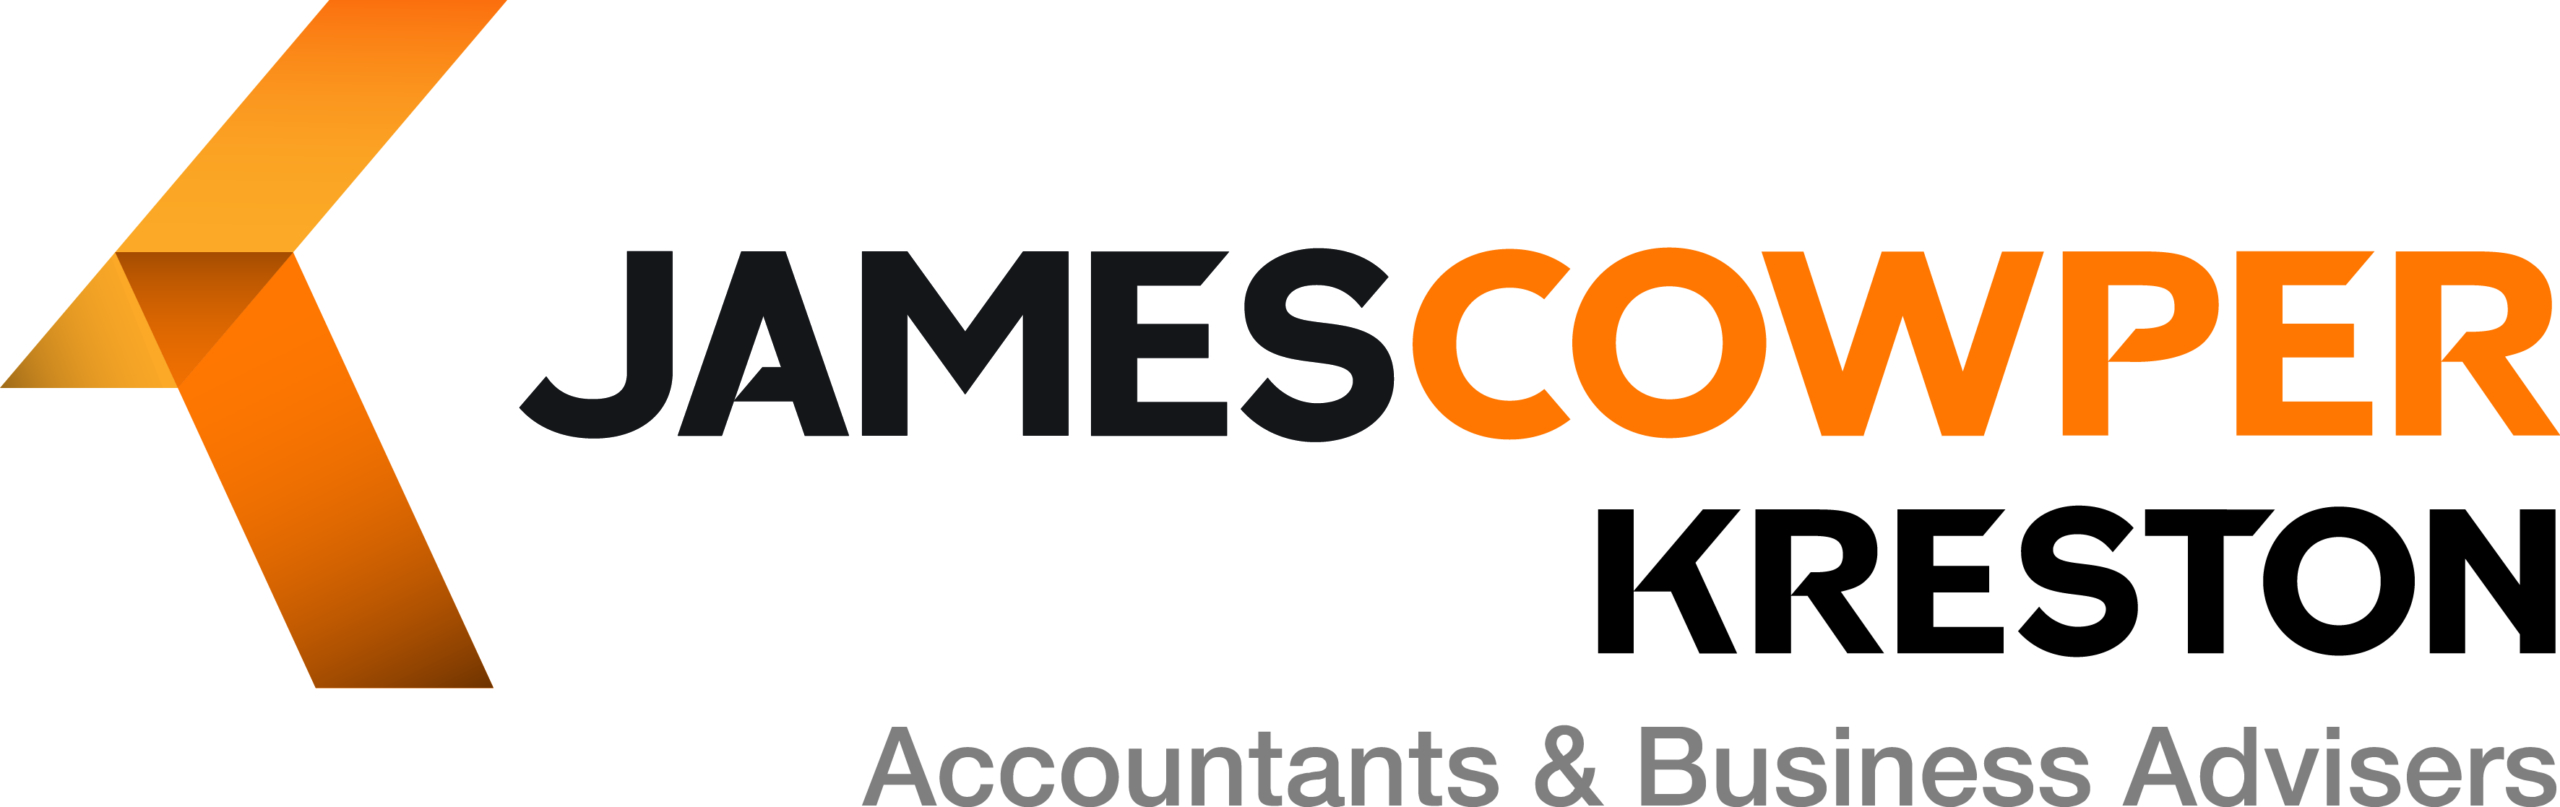 James Cowper Kreston Logo